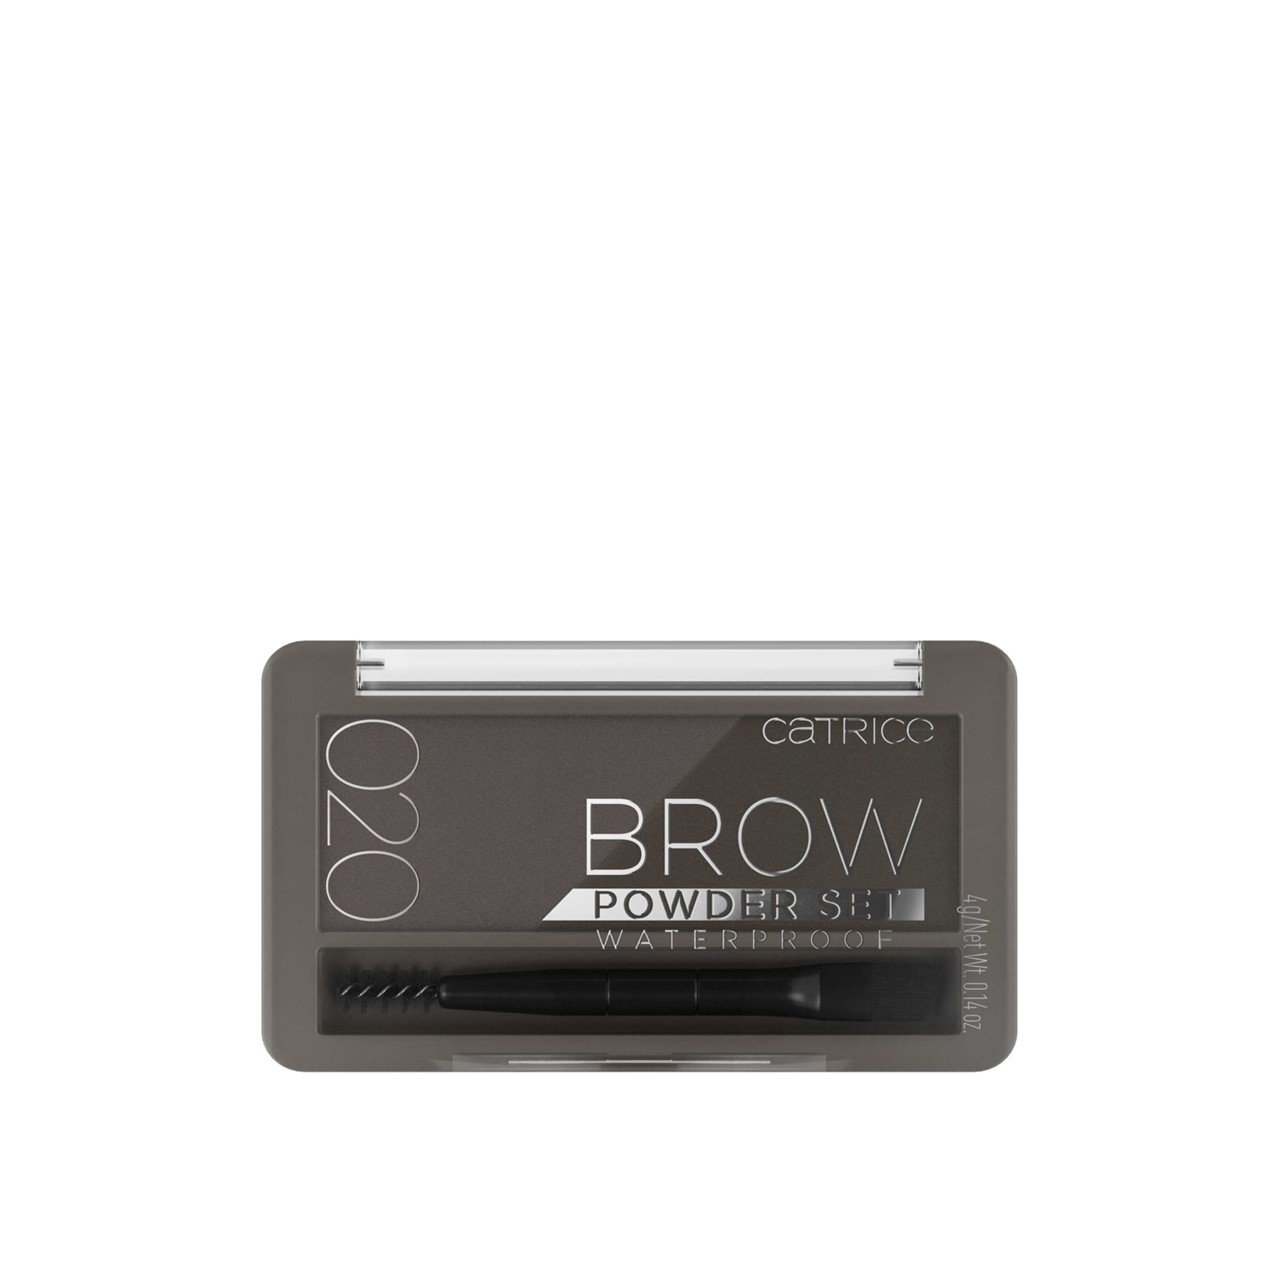 Catrice Brow Powder Set Waterproof 020 Ash Brown 4g (0.14oz)